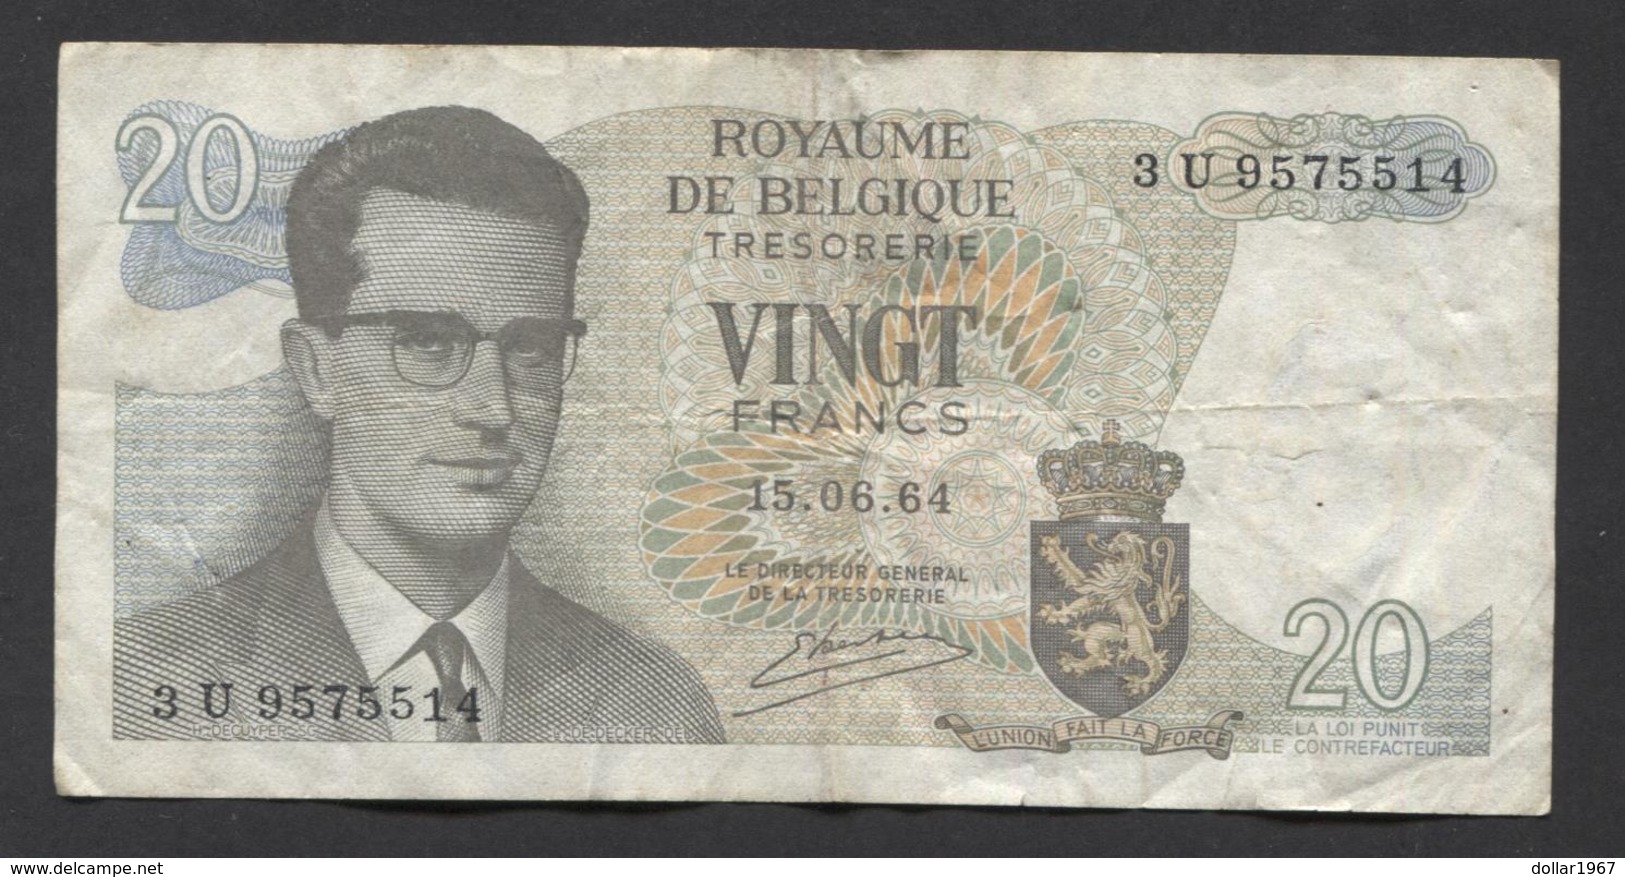 België Belgique Belgium 15 06 1964 -  20 Francs Atomium Baudouin. 3 U 9575514 - 20 Francs